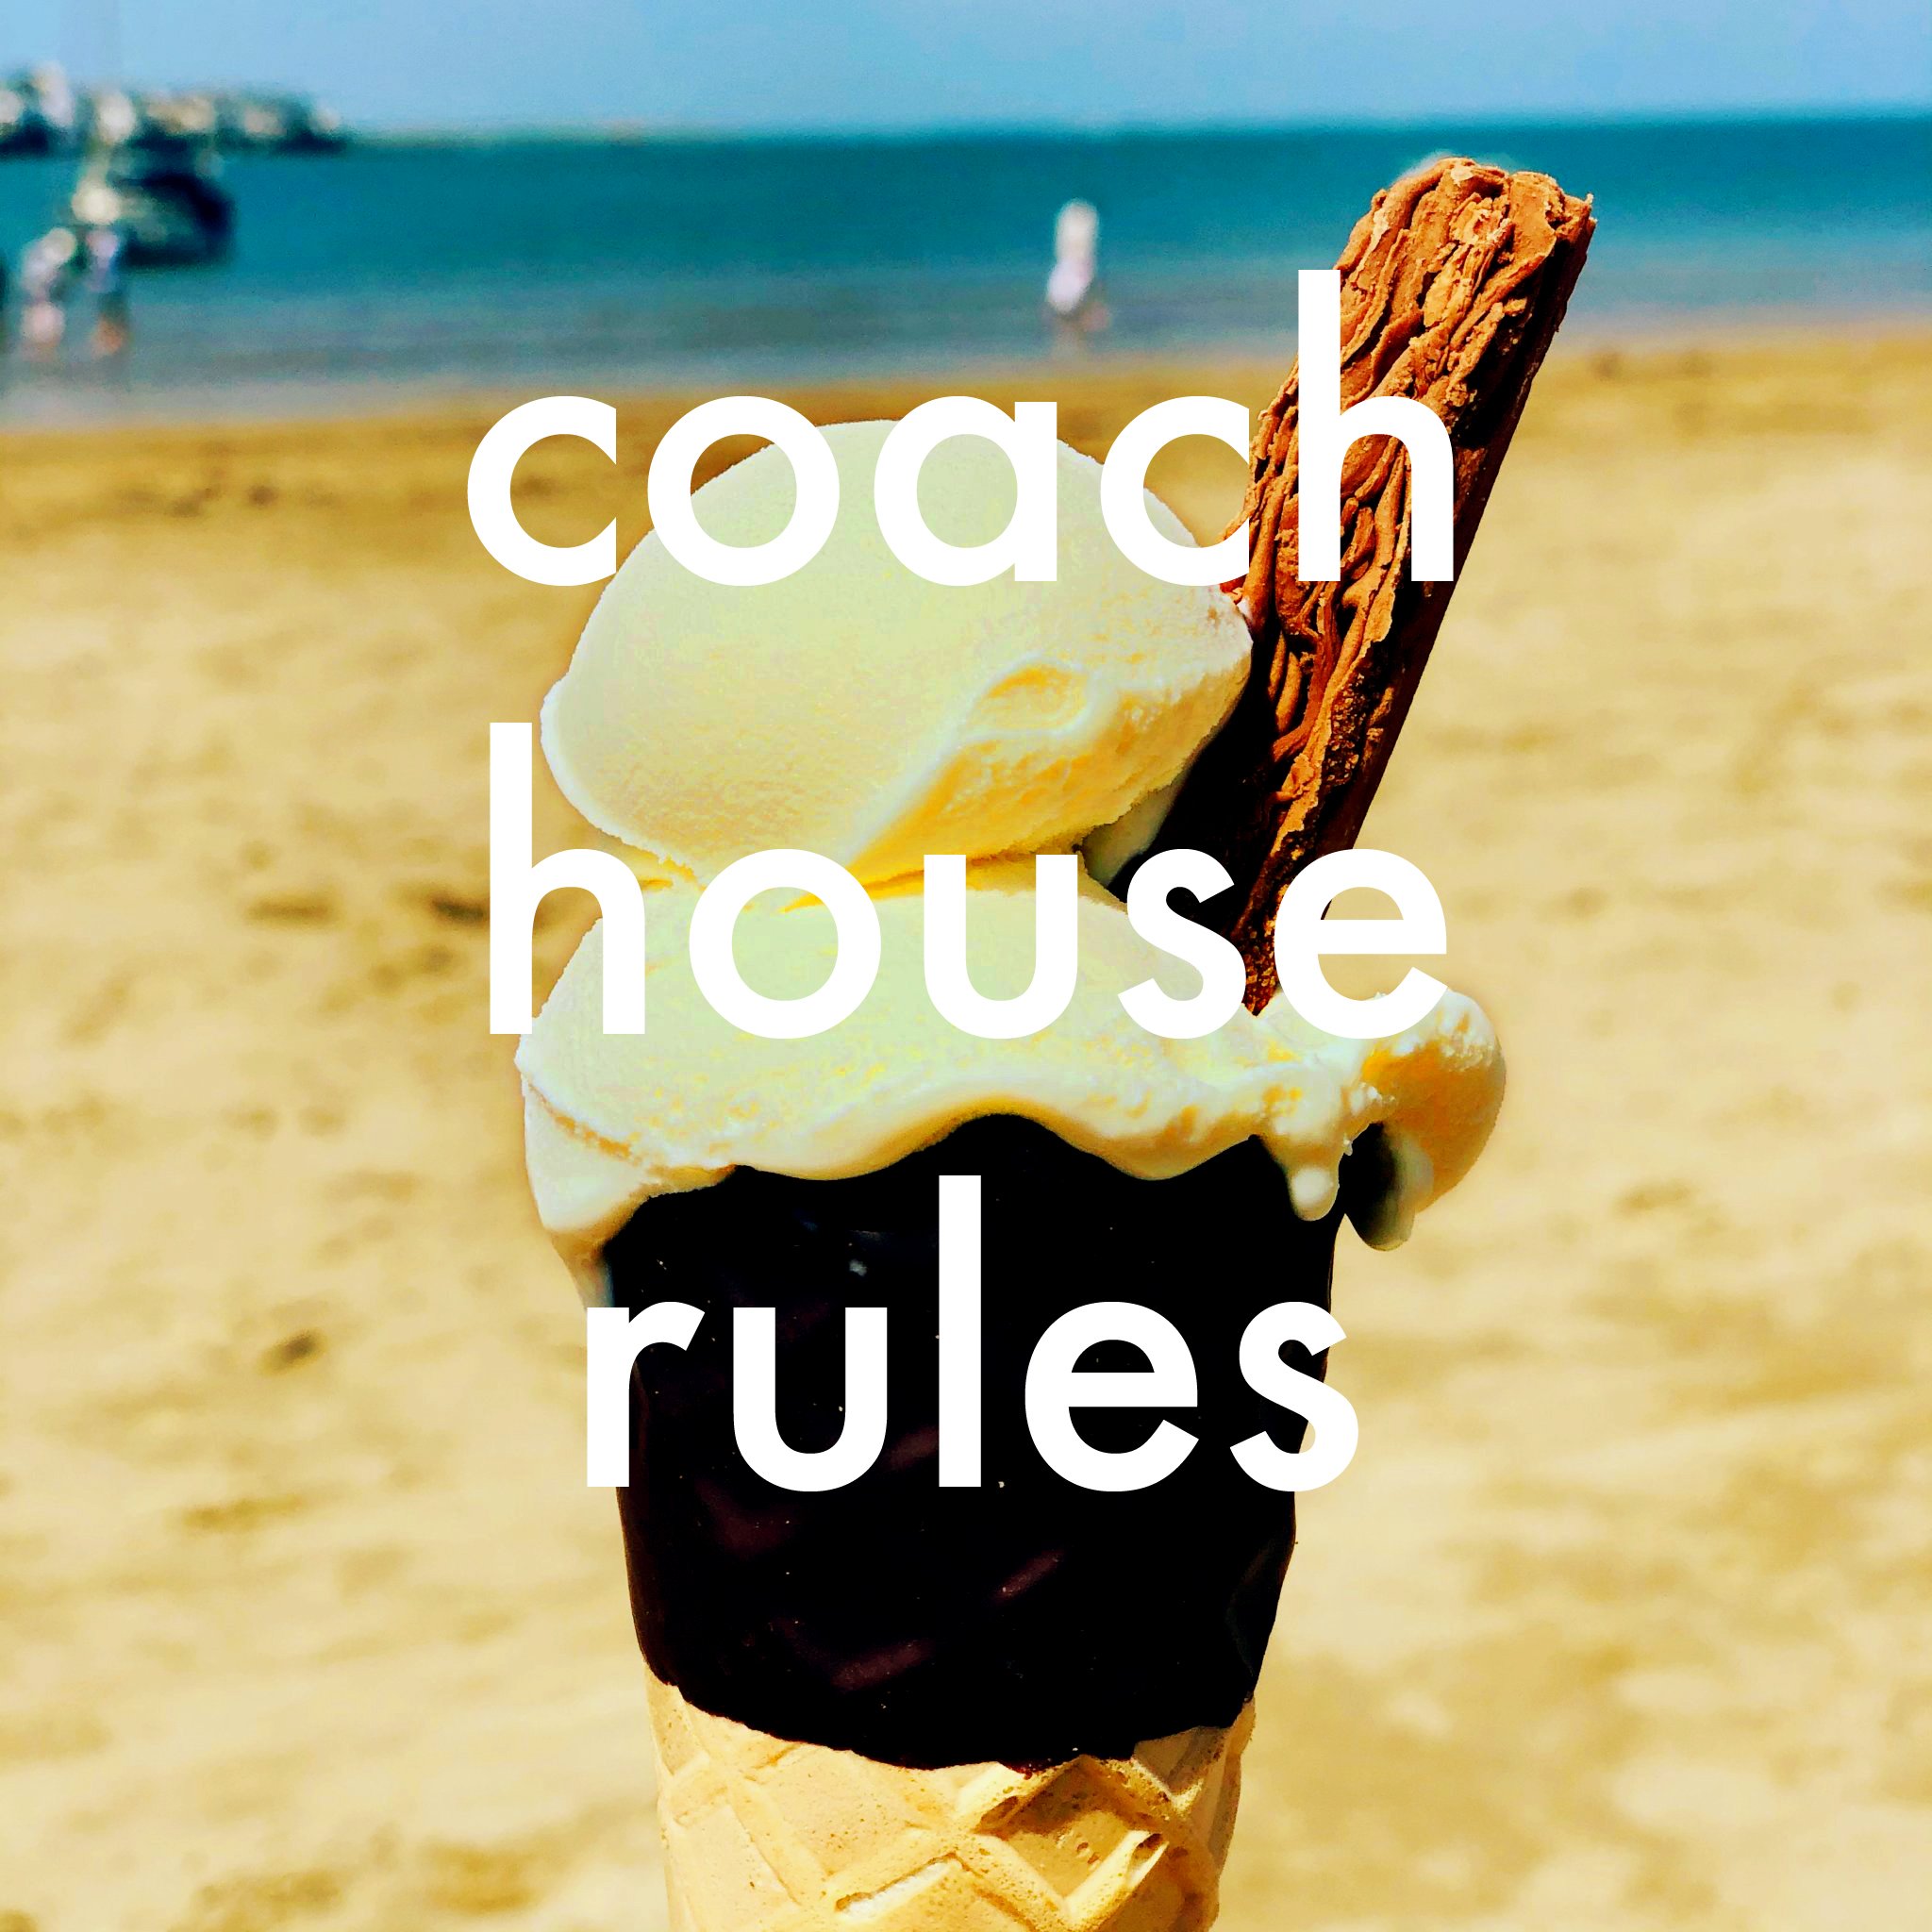 coach house rules